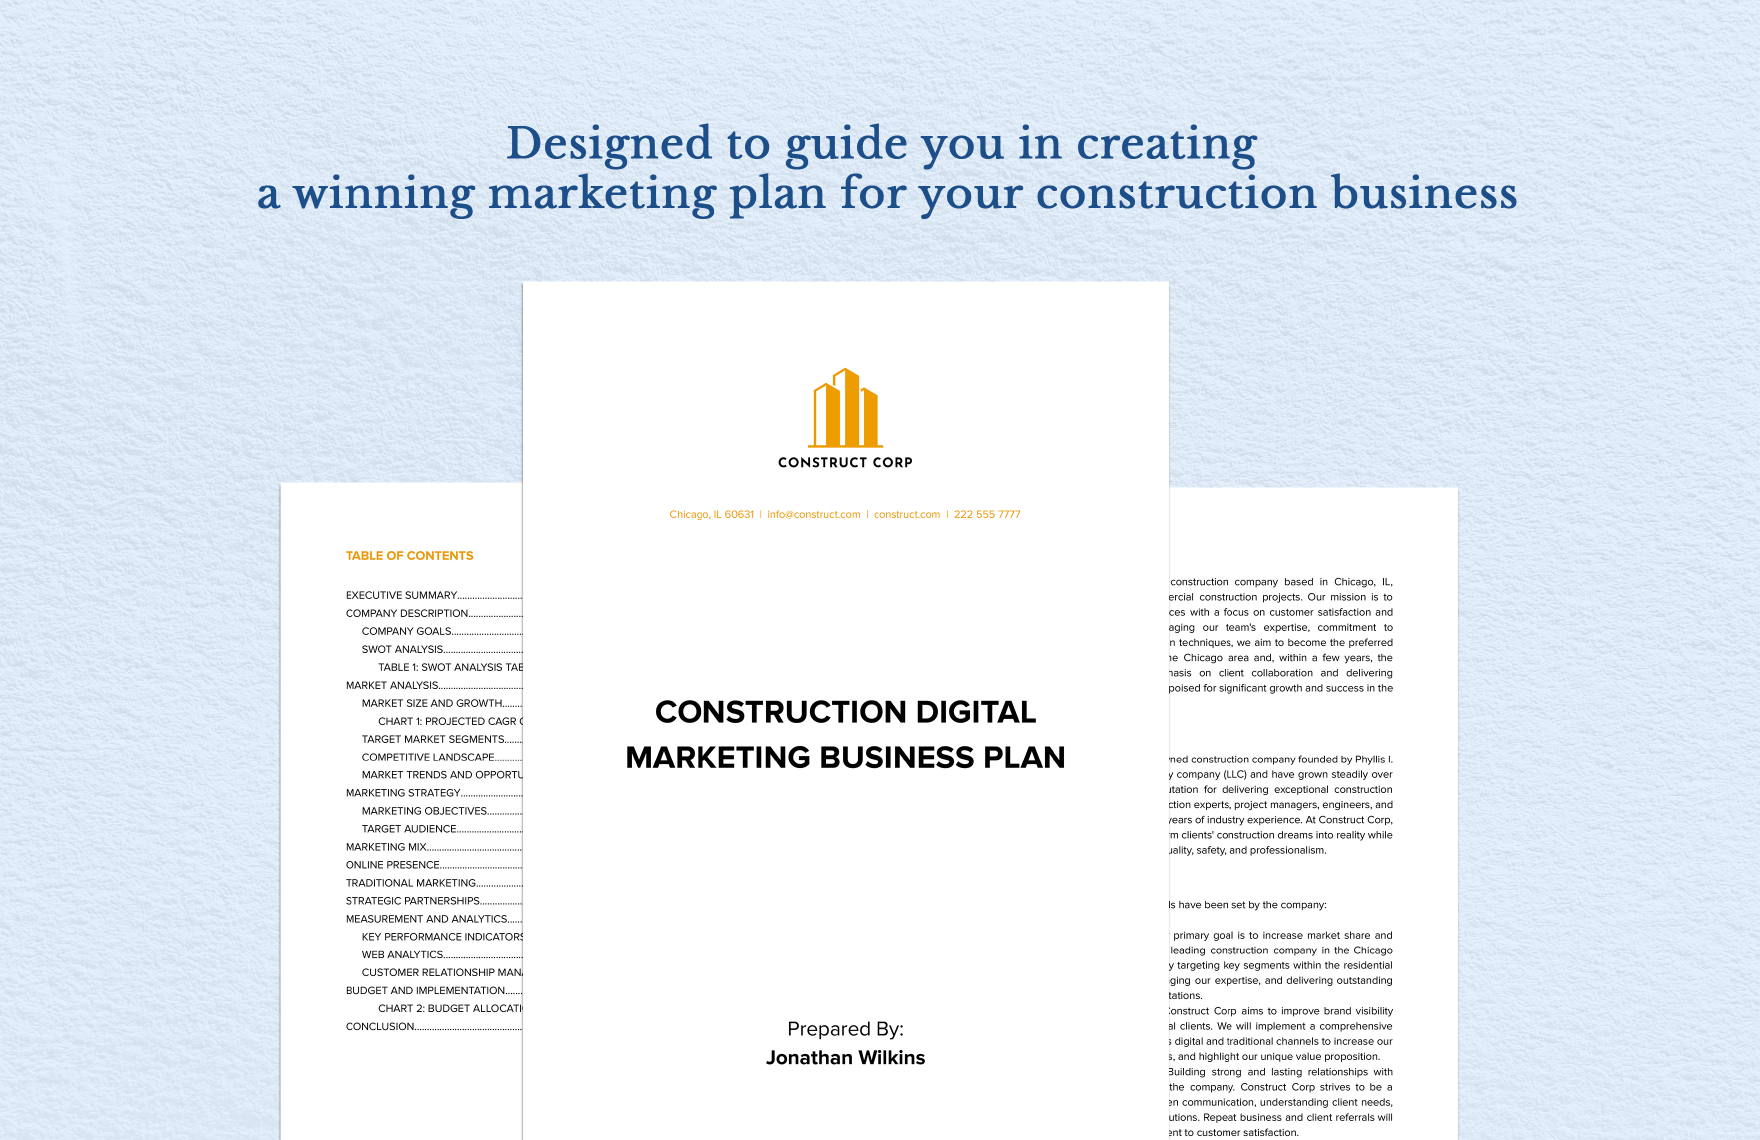 Construction Advertising Marketing Business Plan 